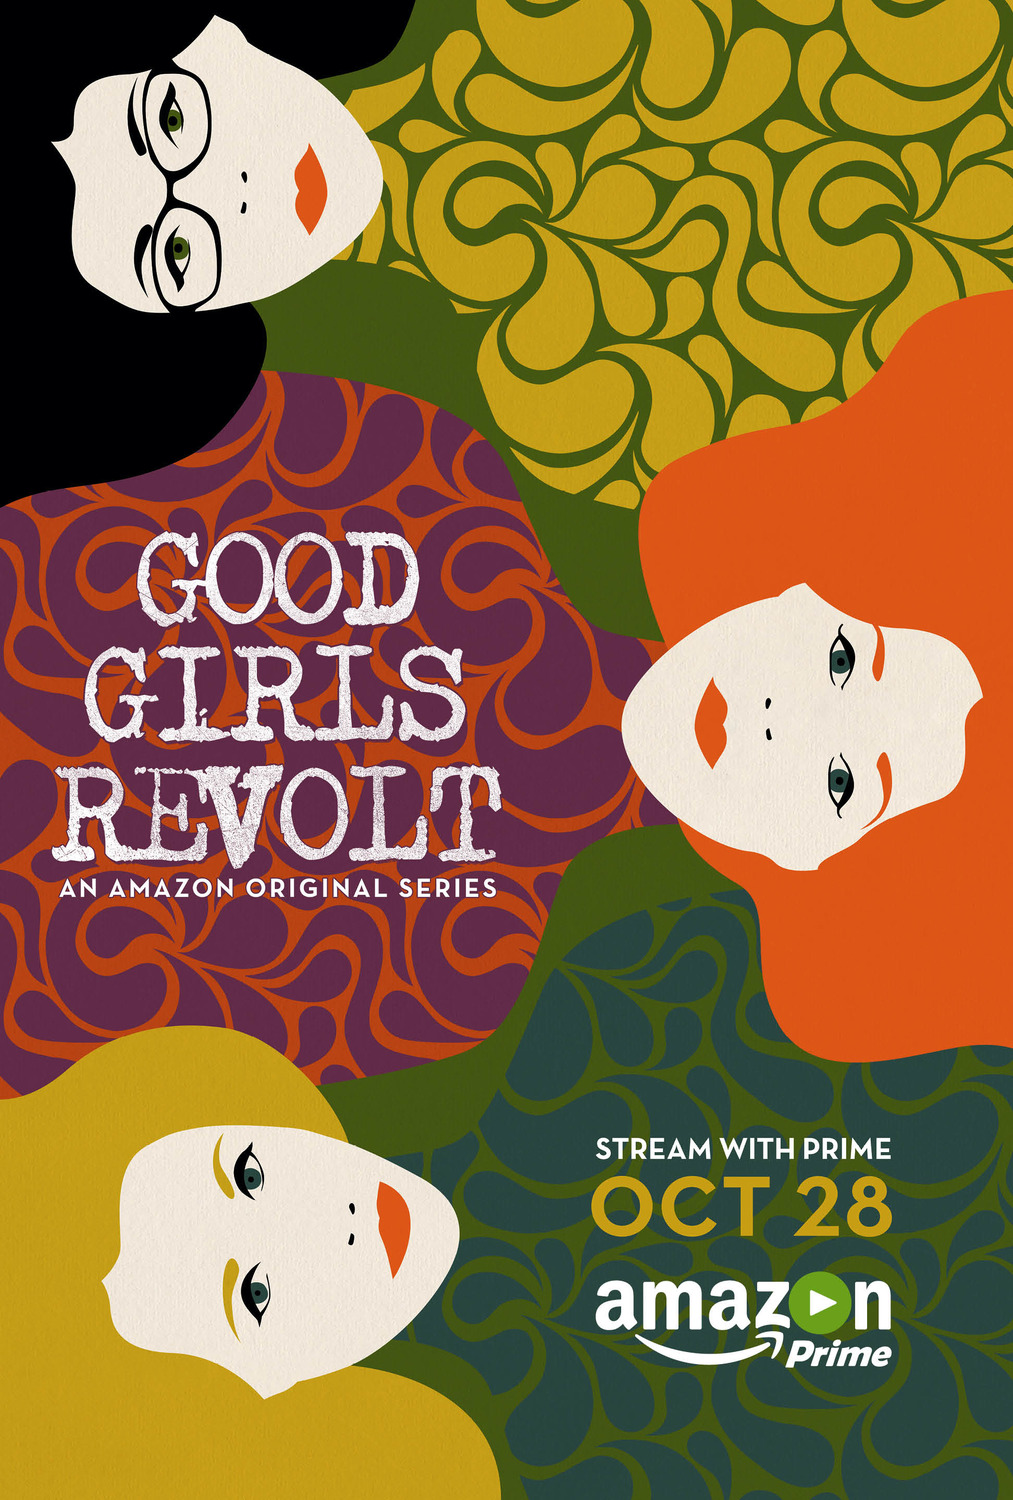 Extra Large TV Poster Image for Good Girls Revolt (#2 of 2)